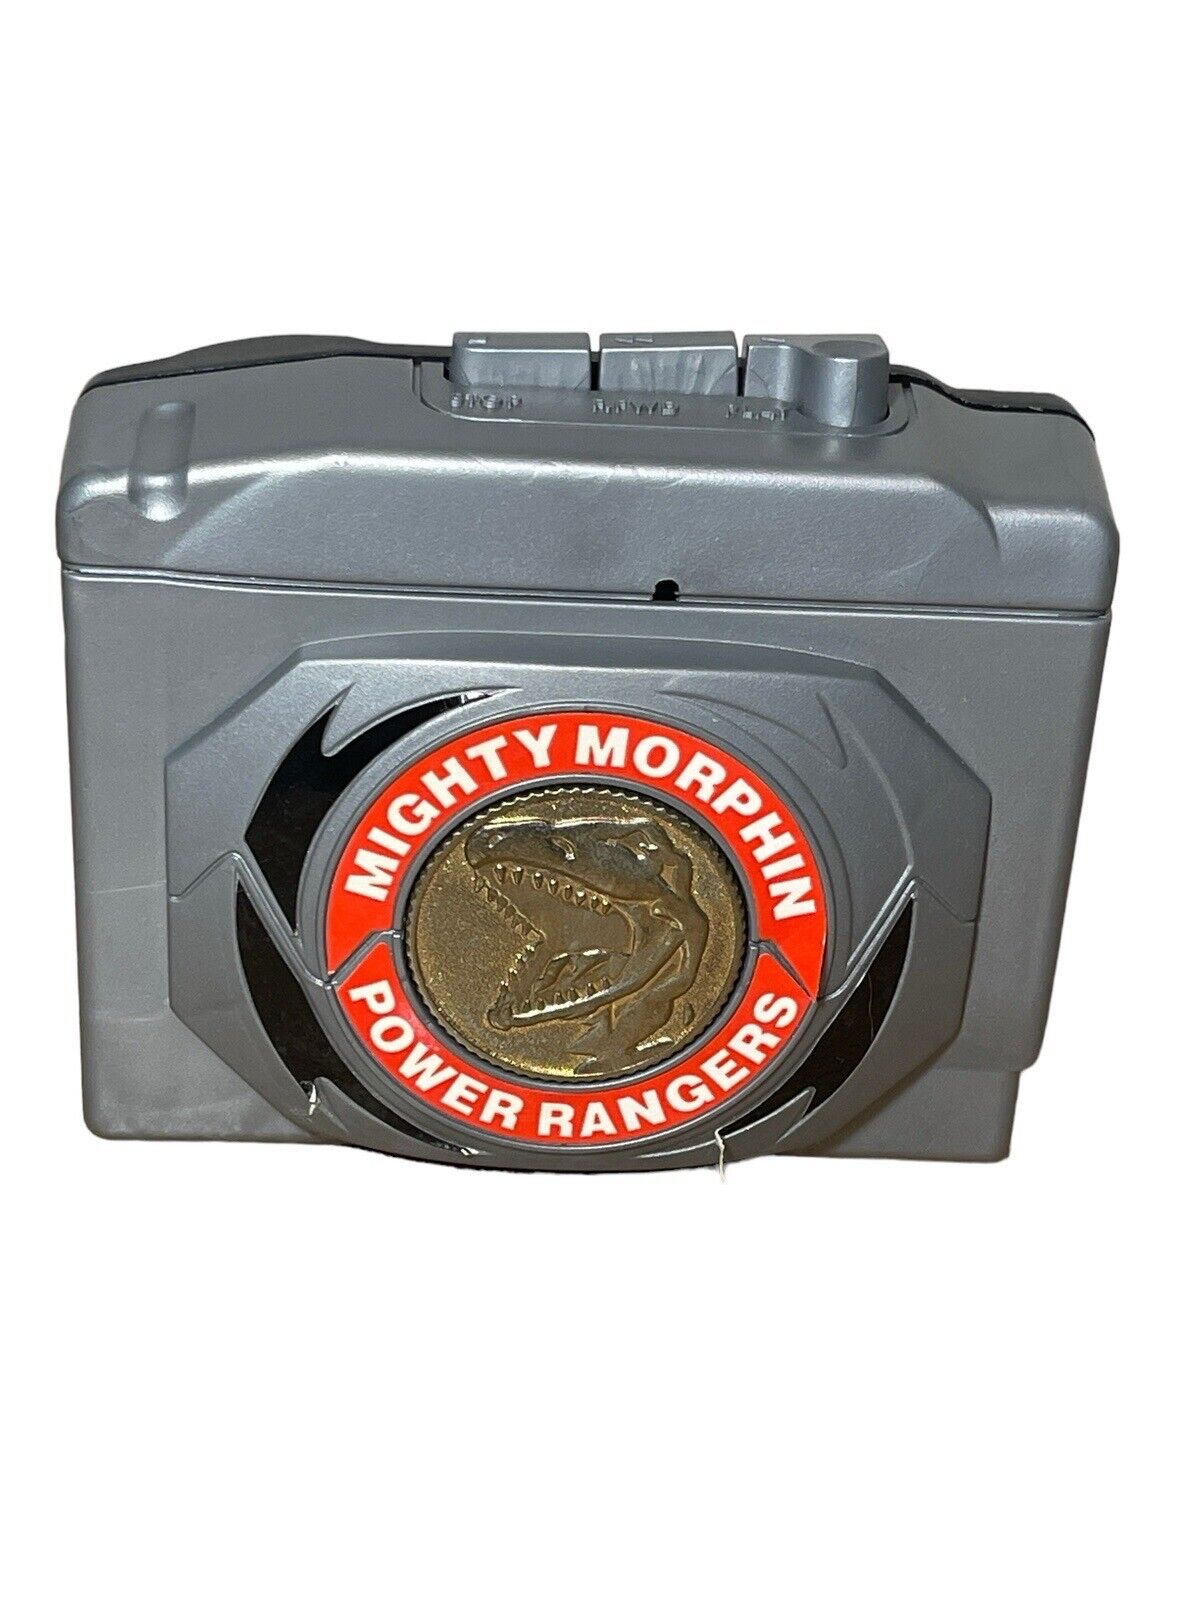 Mighty Morphin Power Rangers Cassette Player 1994 PR-24M Missing Battery Cover